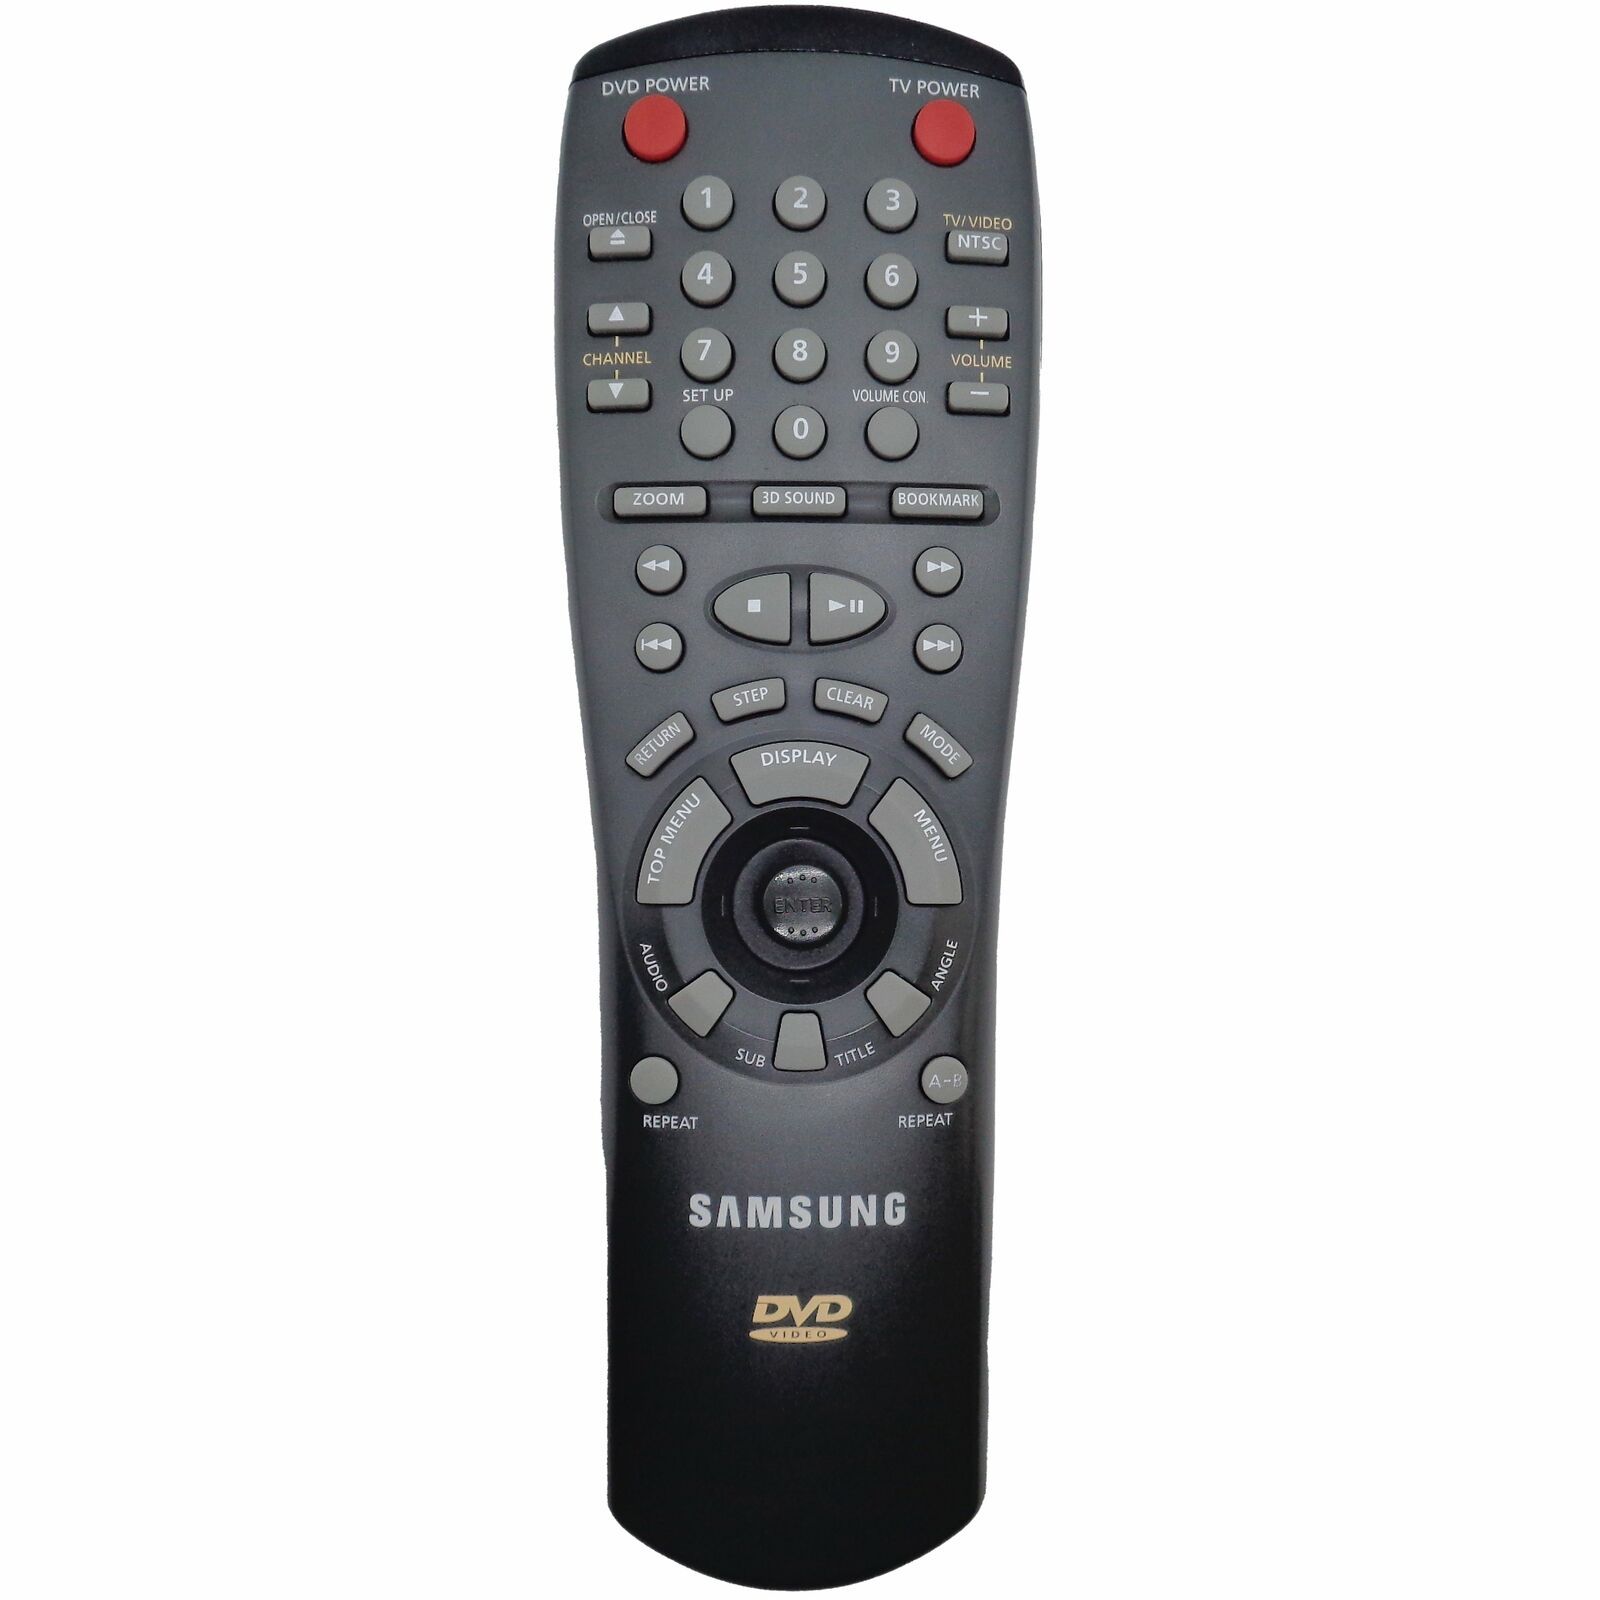 Samsung 10141A Factory Original DVD Player and 50 similar items